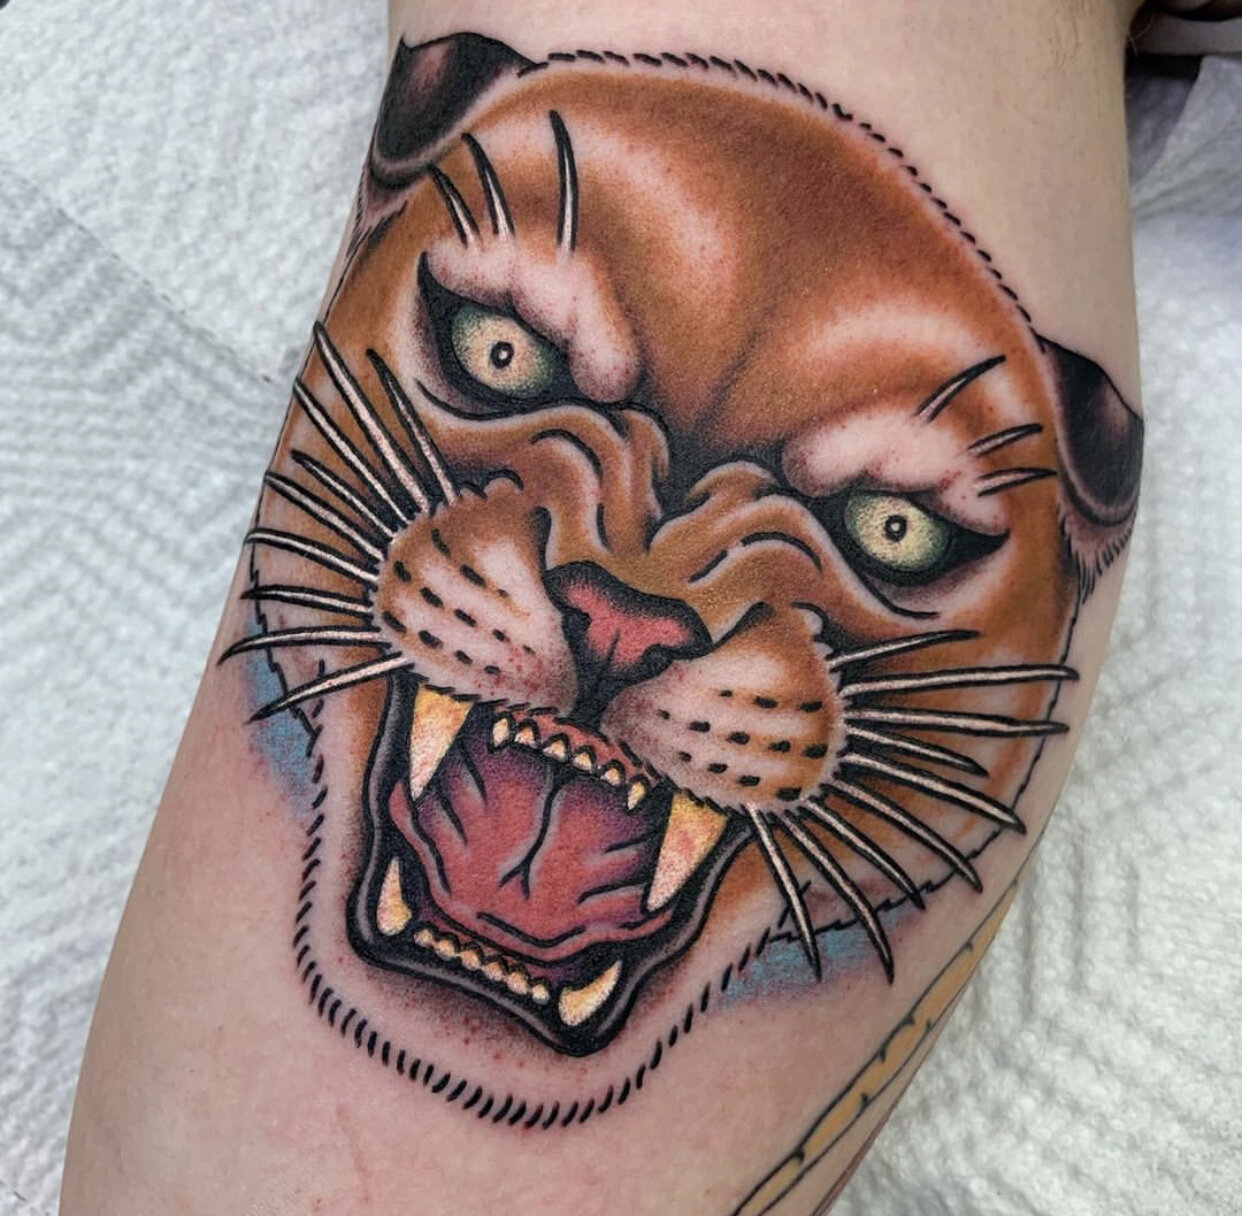 Cat-Face-Tattoo-Traditional-Stephen-Costello-Great-Wave-Tattoo-Austin-Texas.jpg